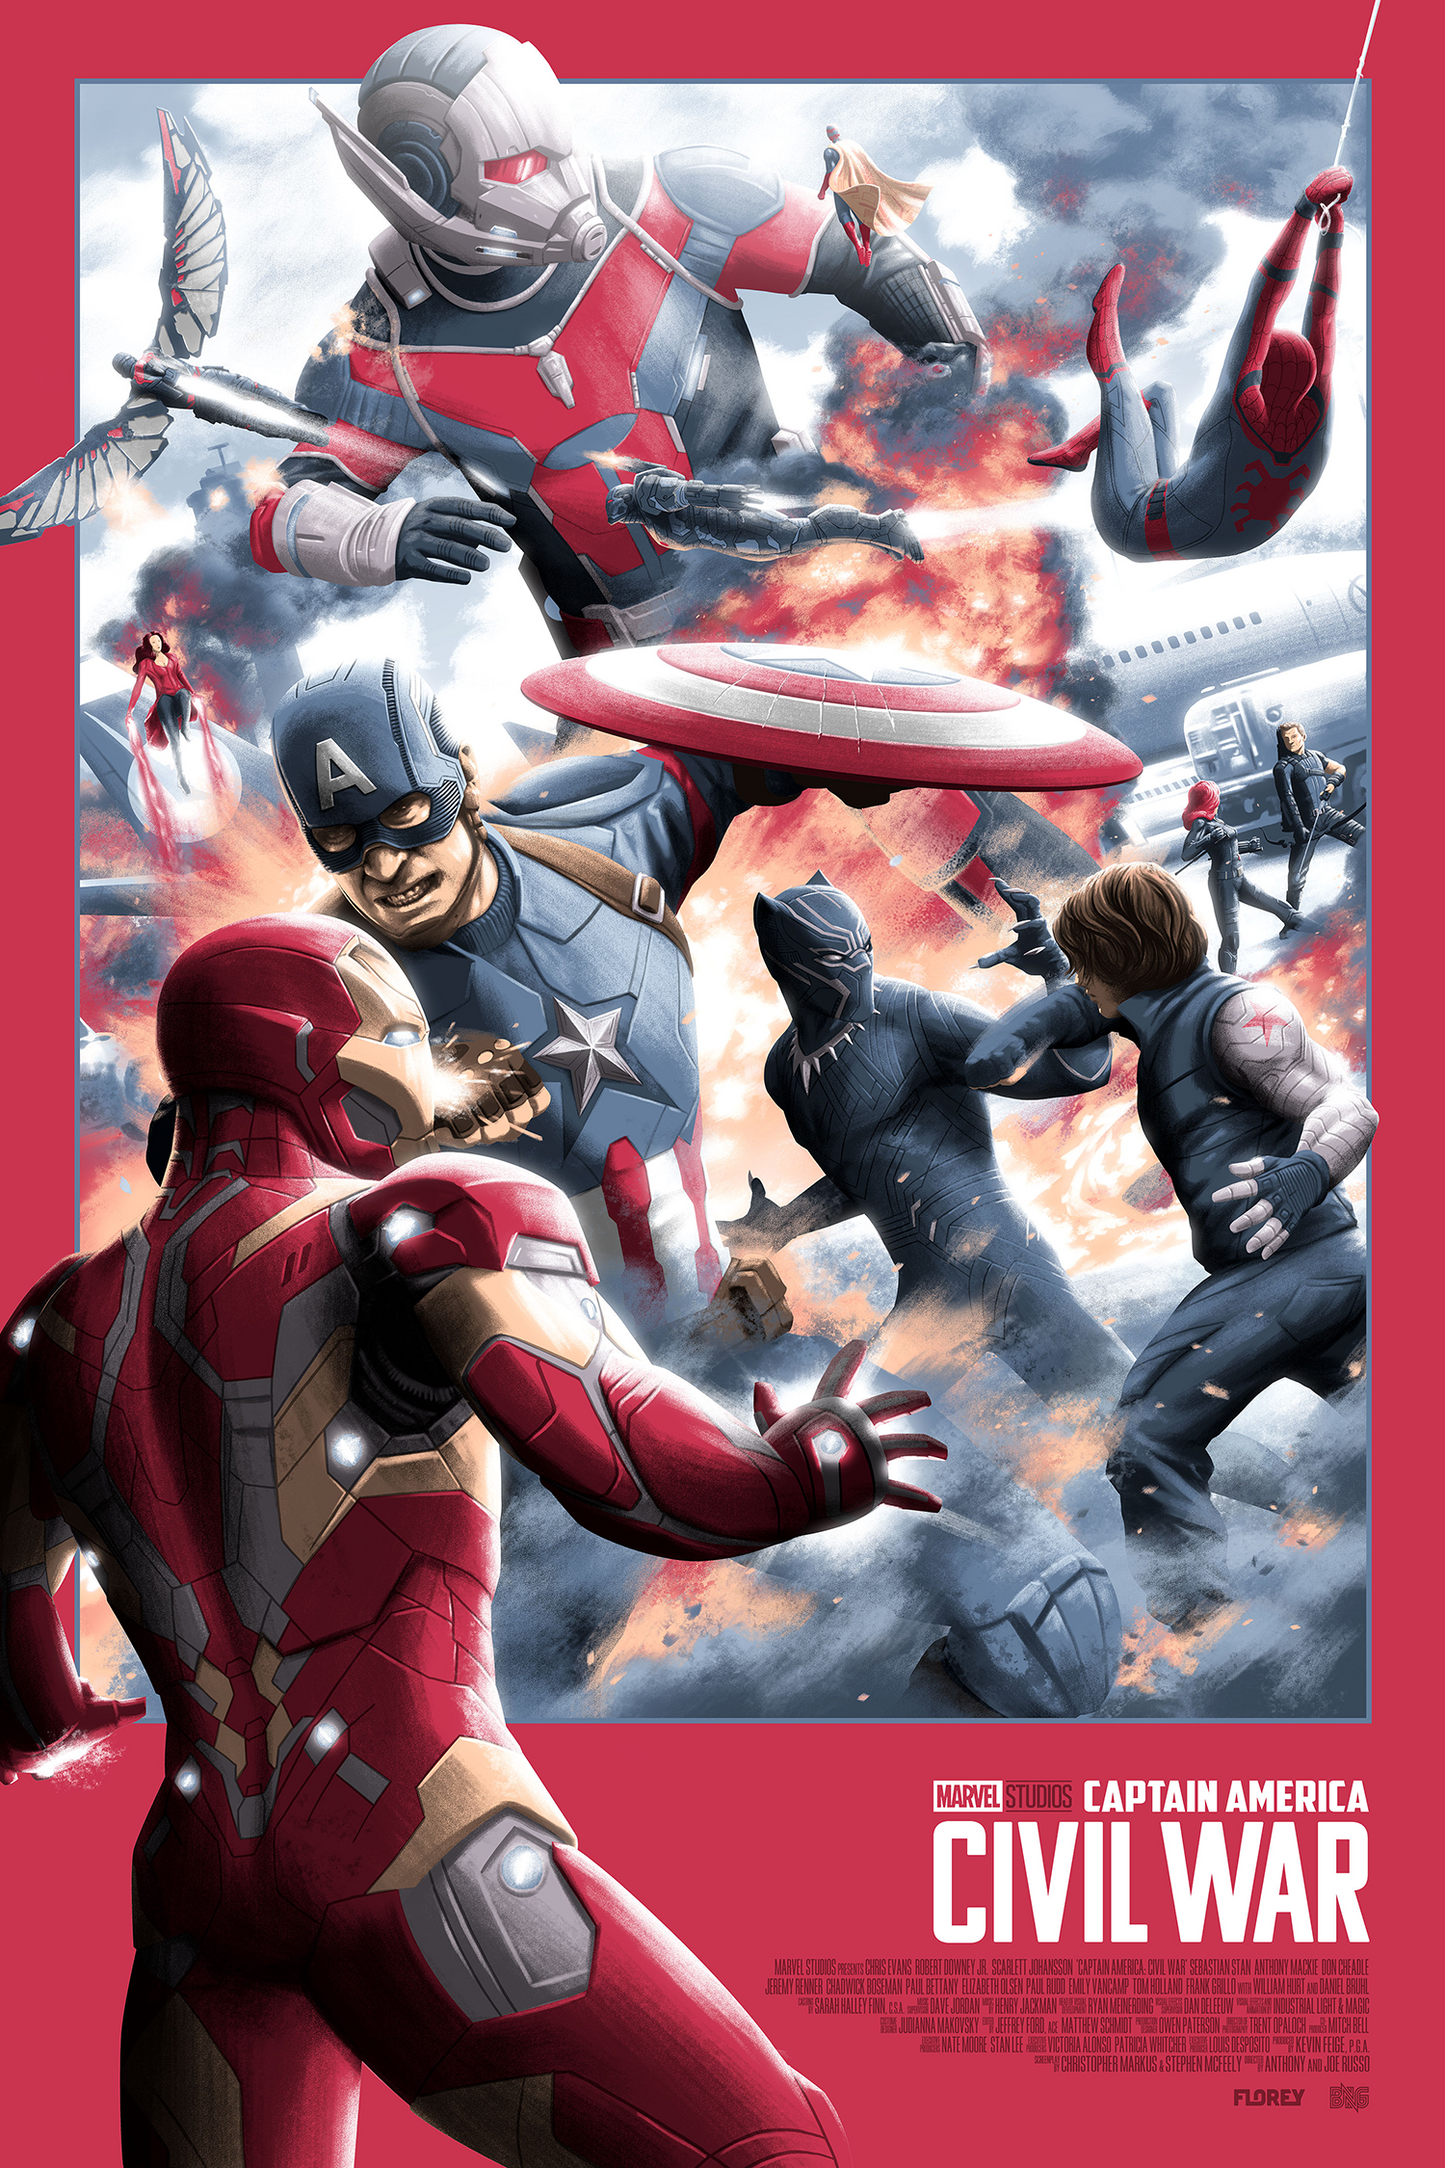 Florey "Captain America: Civil War" Variant